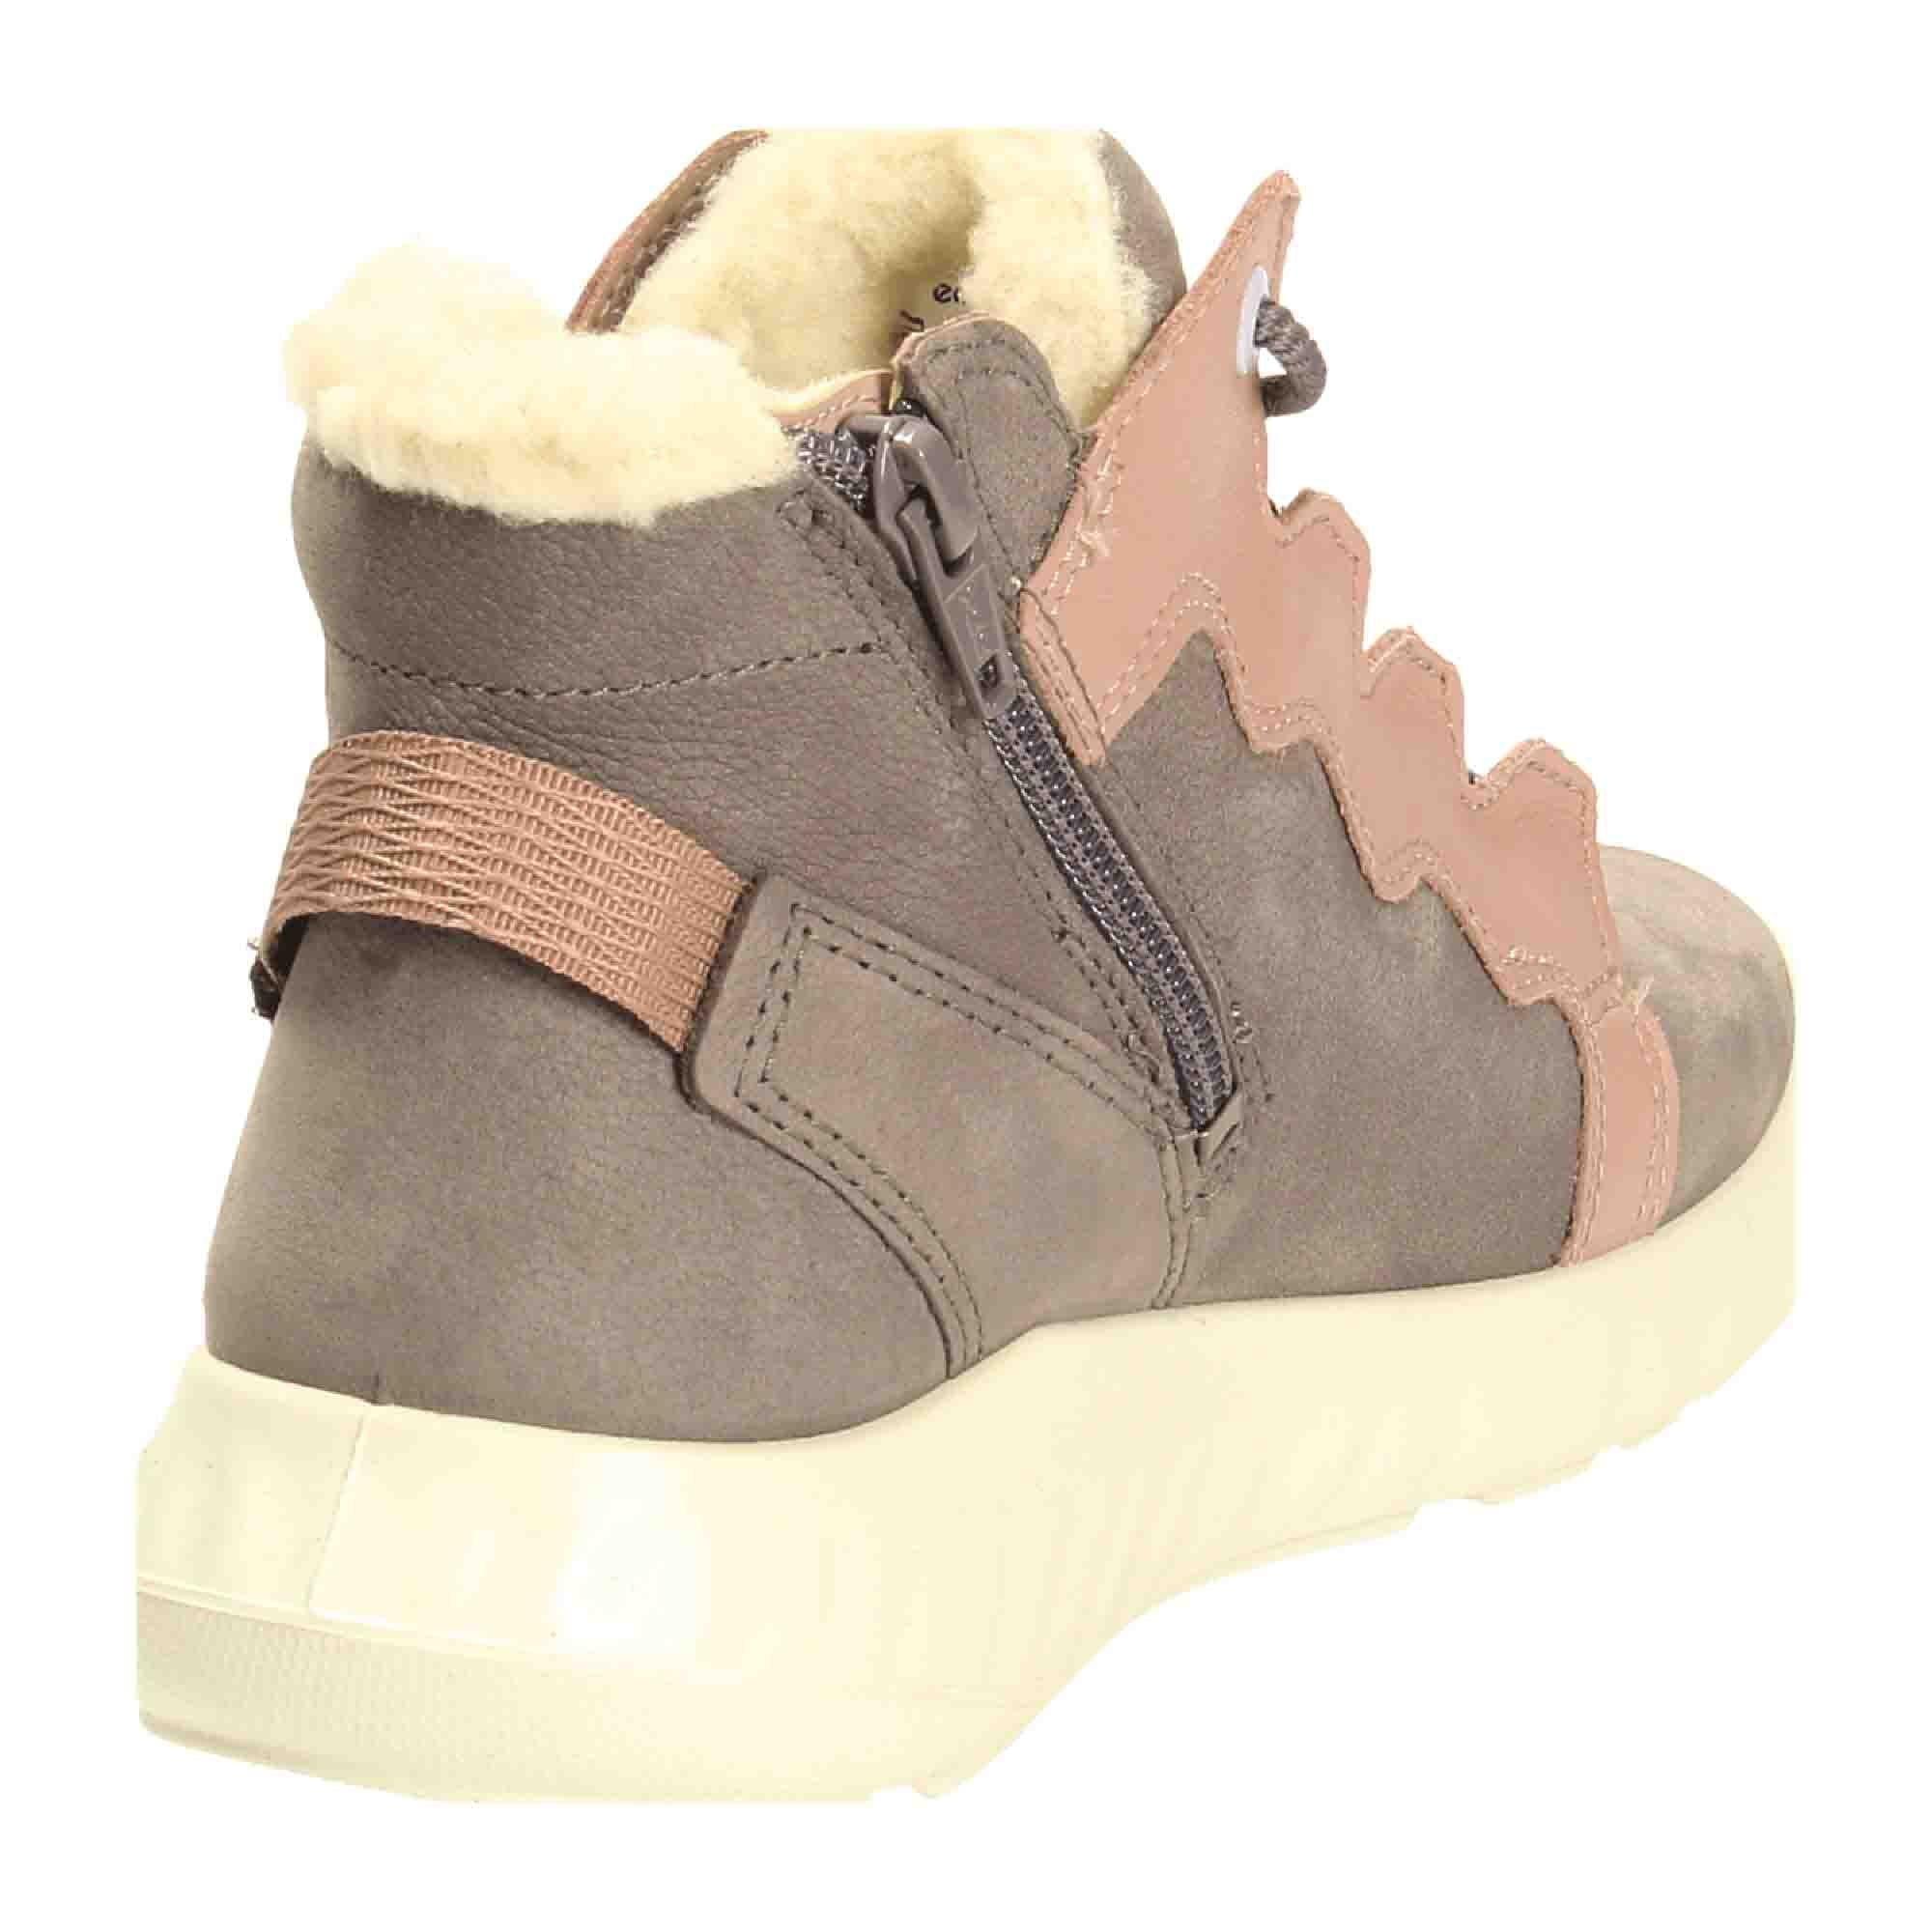 Ecco SP.1 LITE K Kids Sneakers - Stylish Beige Comfort and Durability